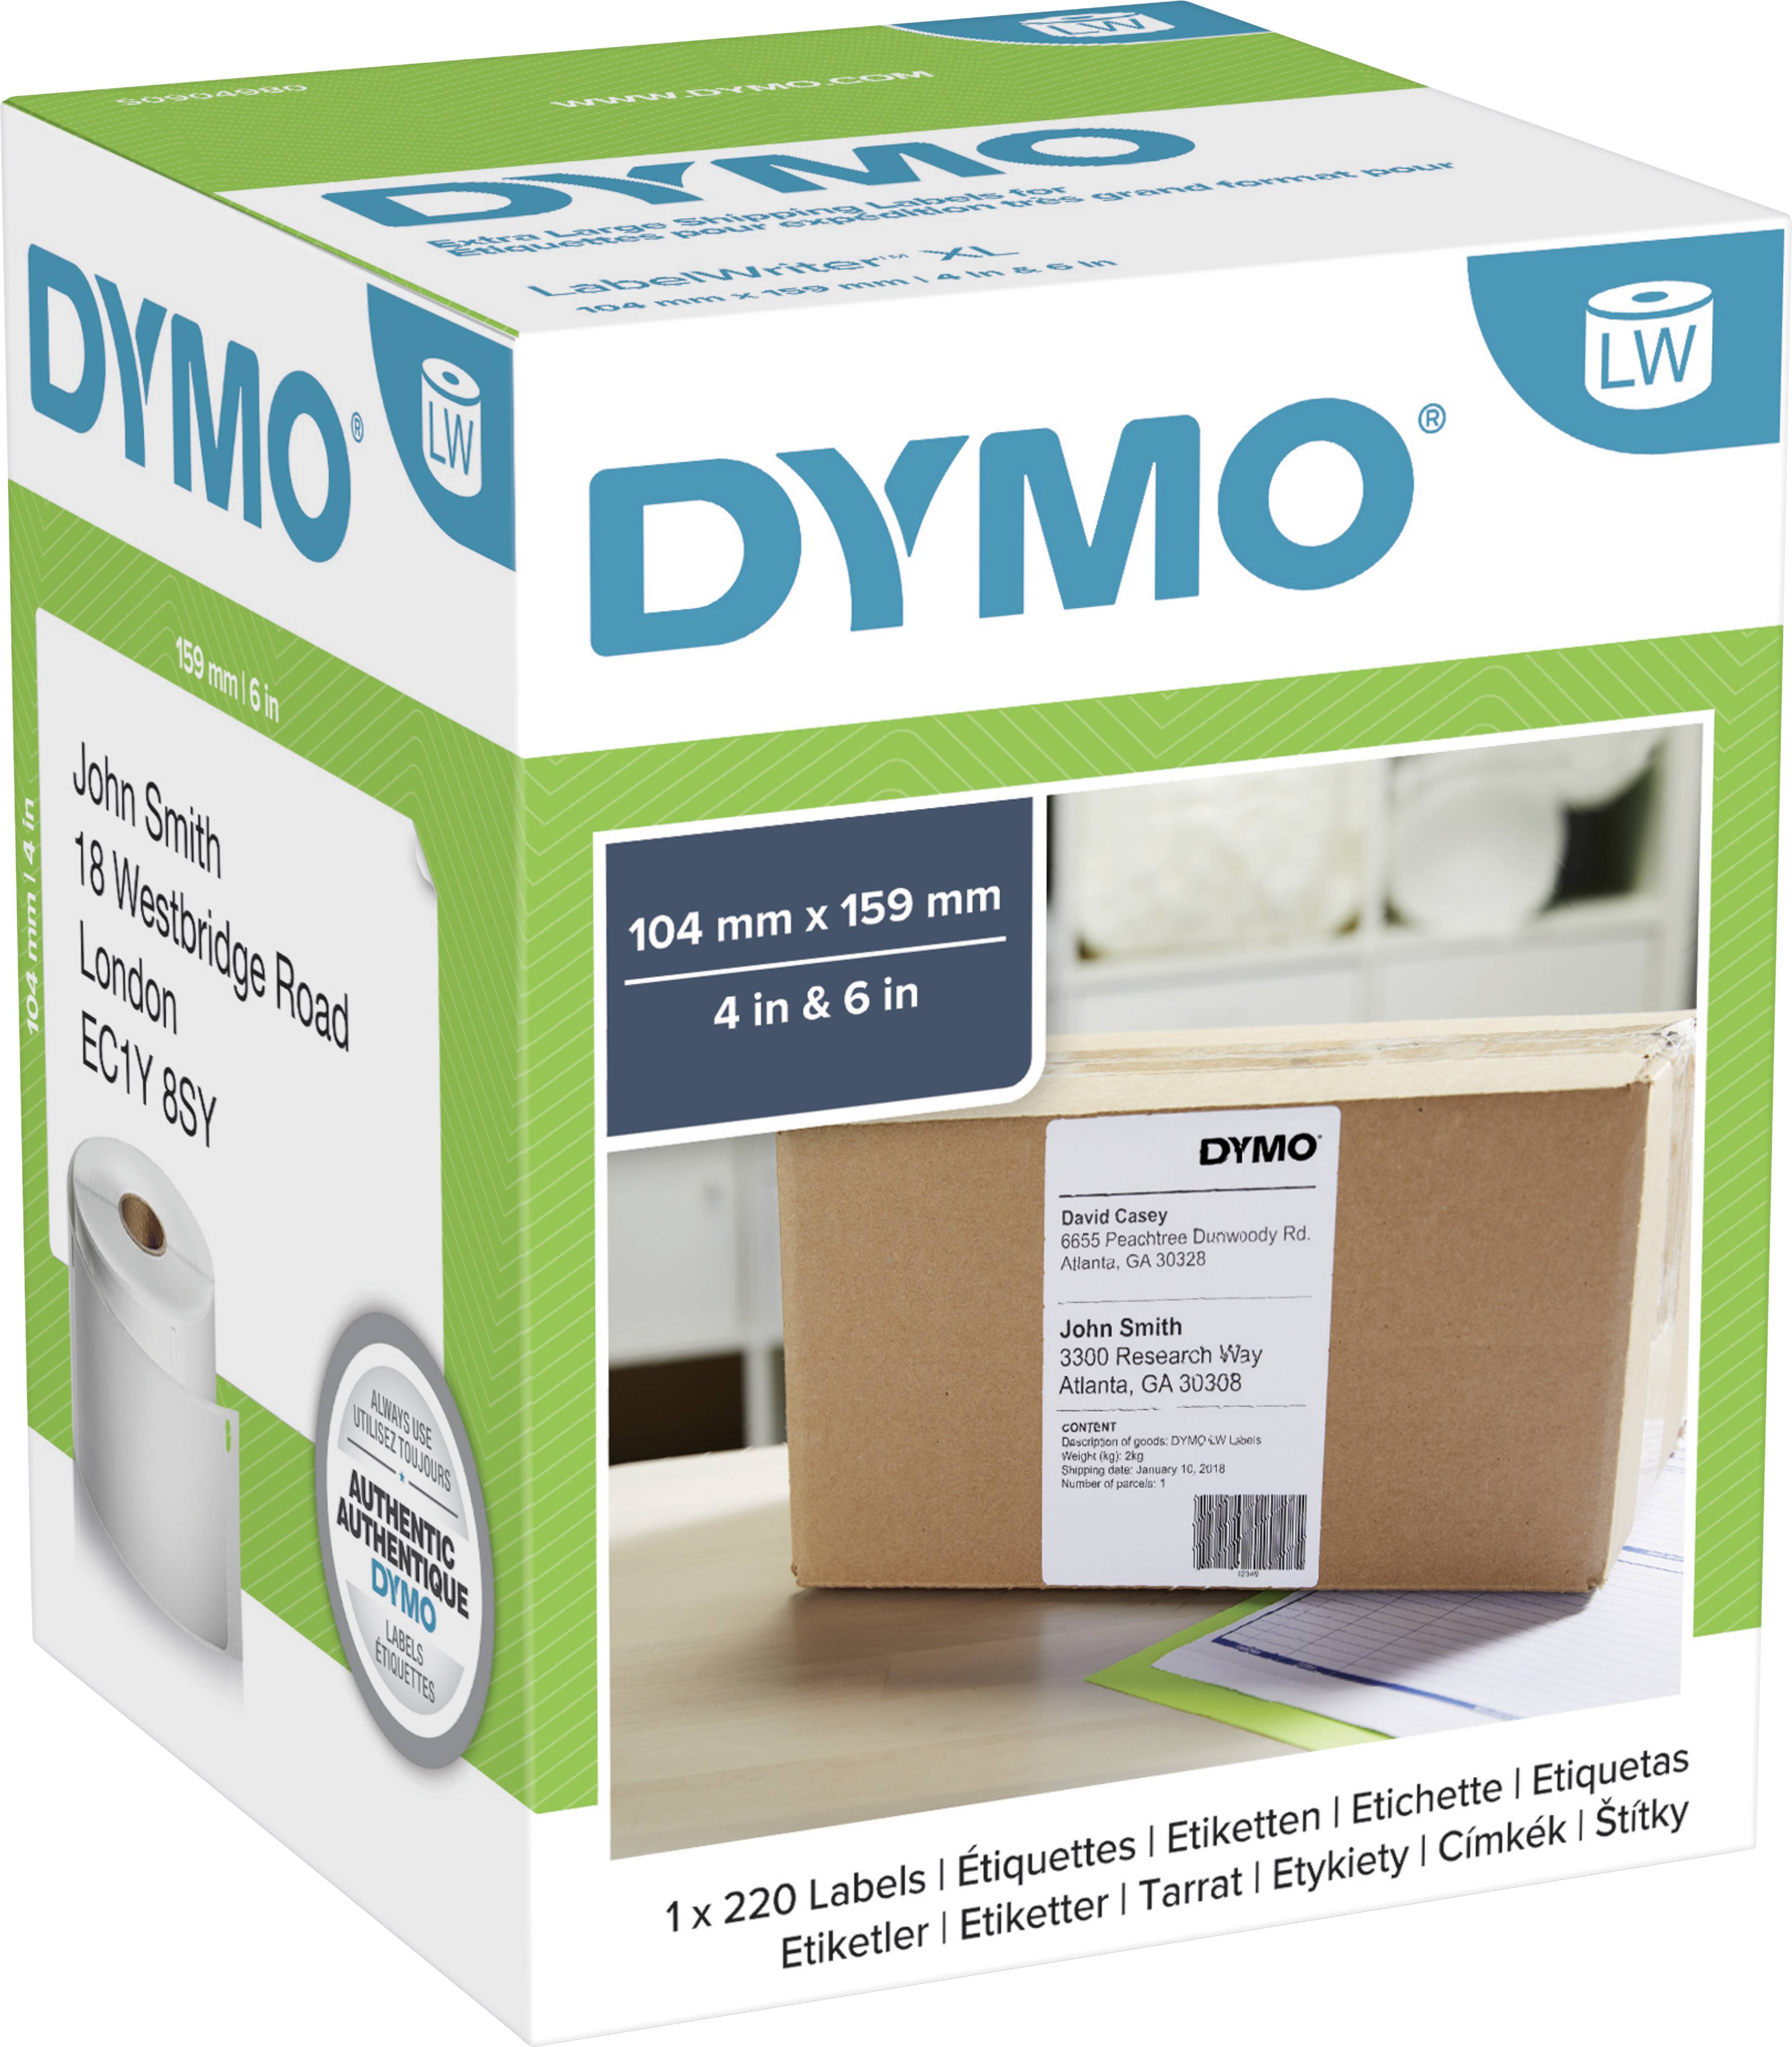 Dymo Labelwriter 4Xl Etikett S0904980 